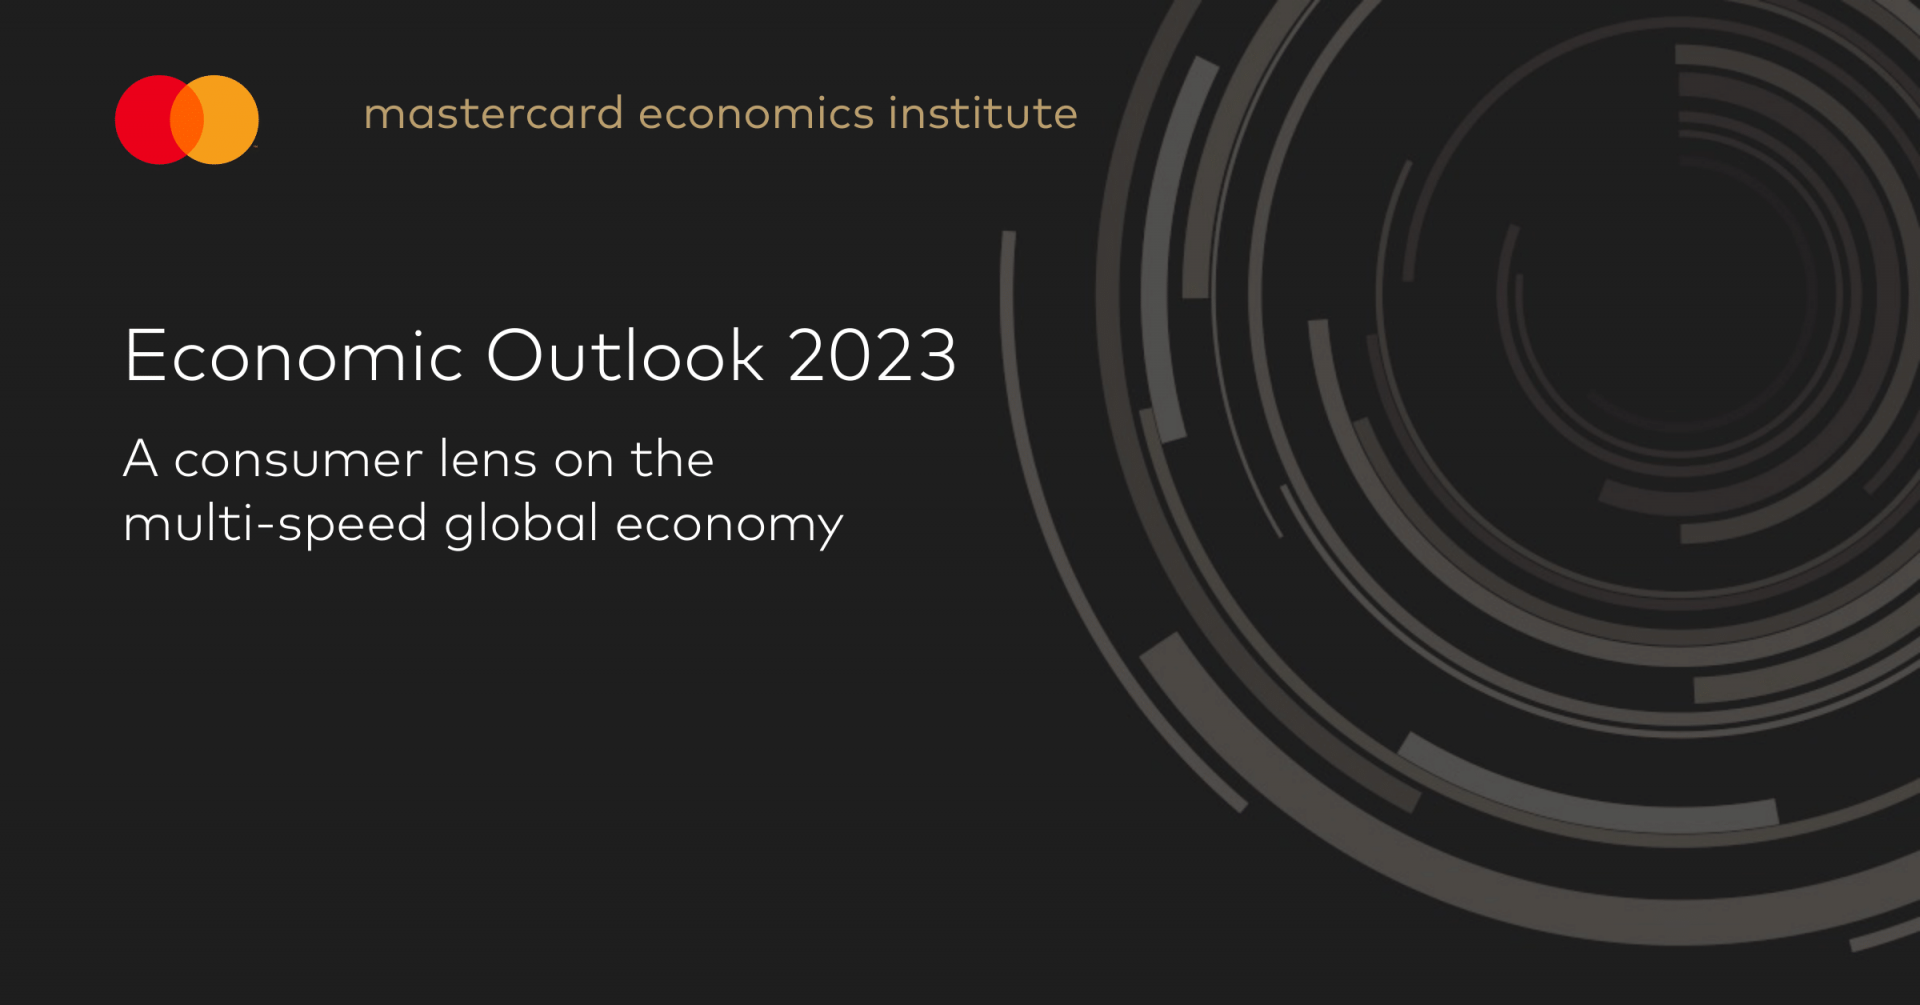 Mastercard reveals Economic Outlook 2023